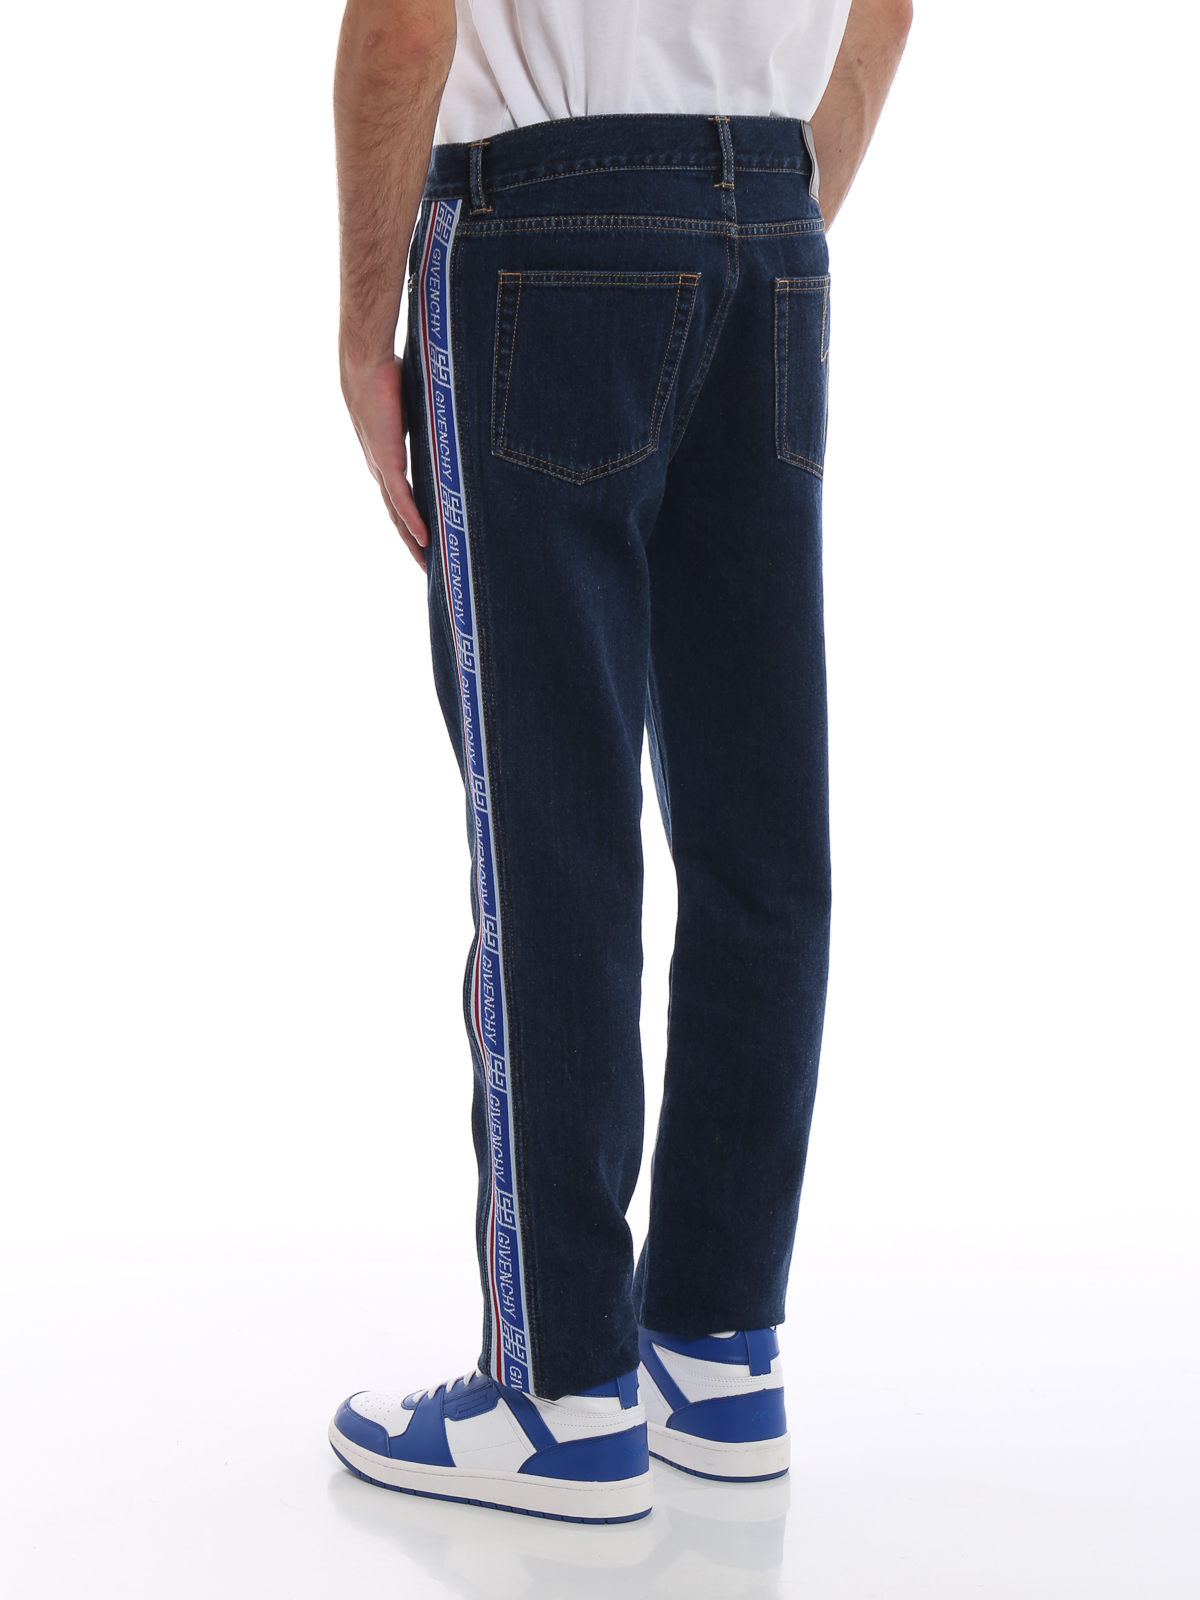 givenchy logo jeans